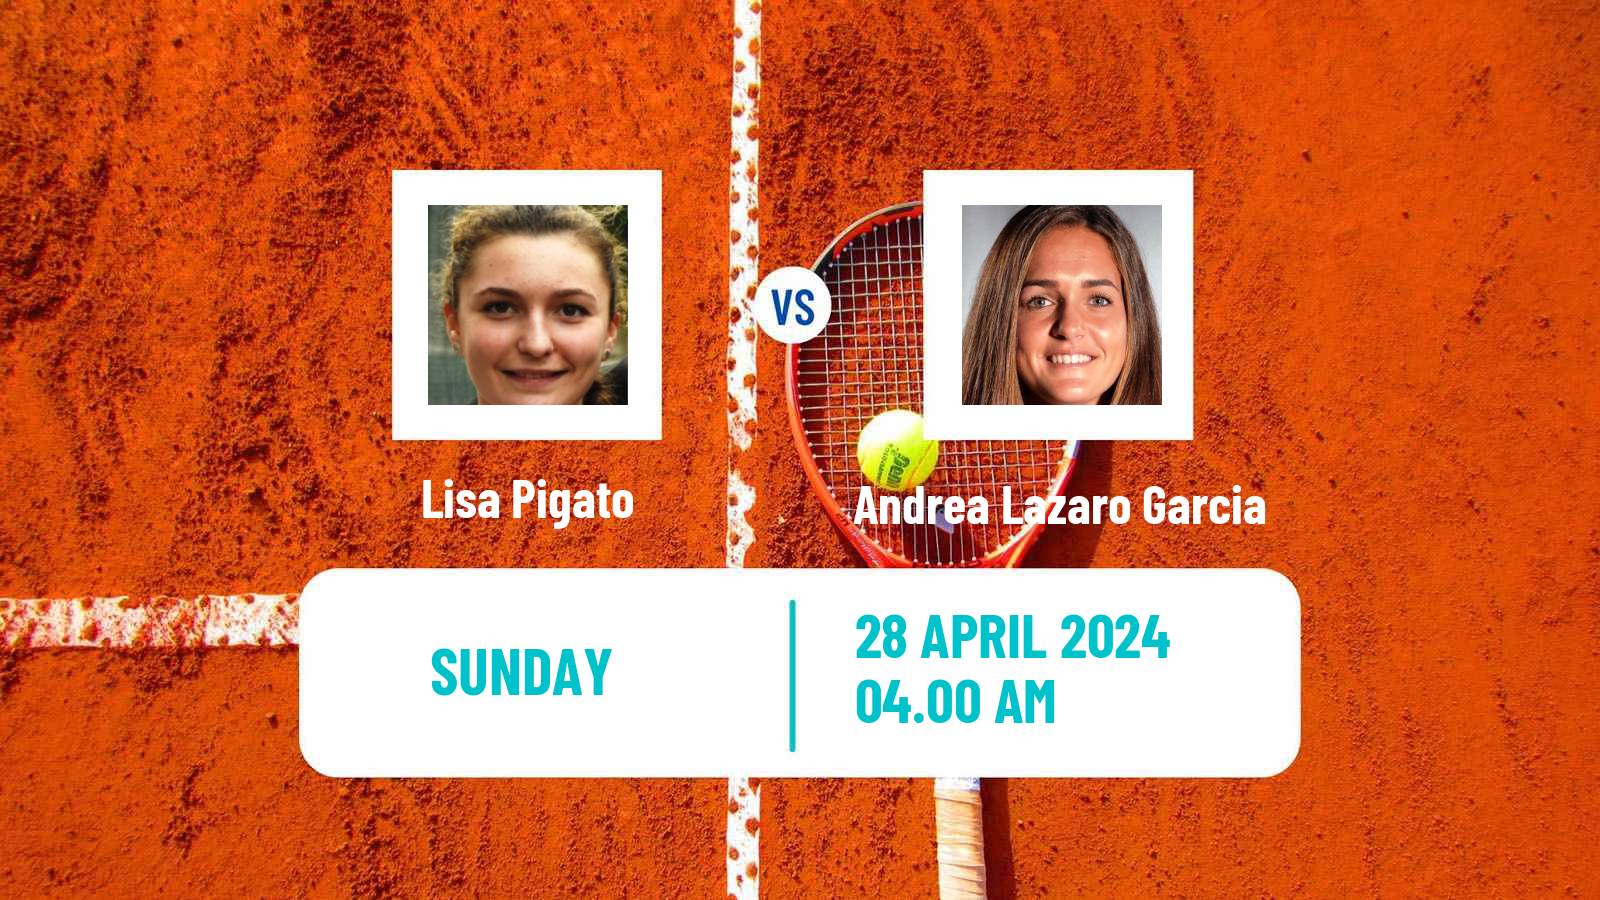 Tennis ITF W35 Santa Margherita Di Pula 5 Women Lisa Pigato - Andrea Lazaro Garcia